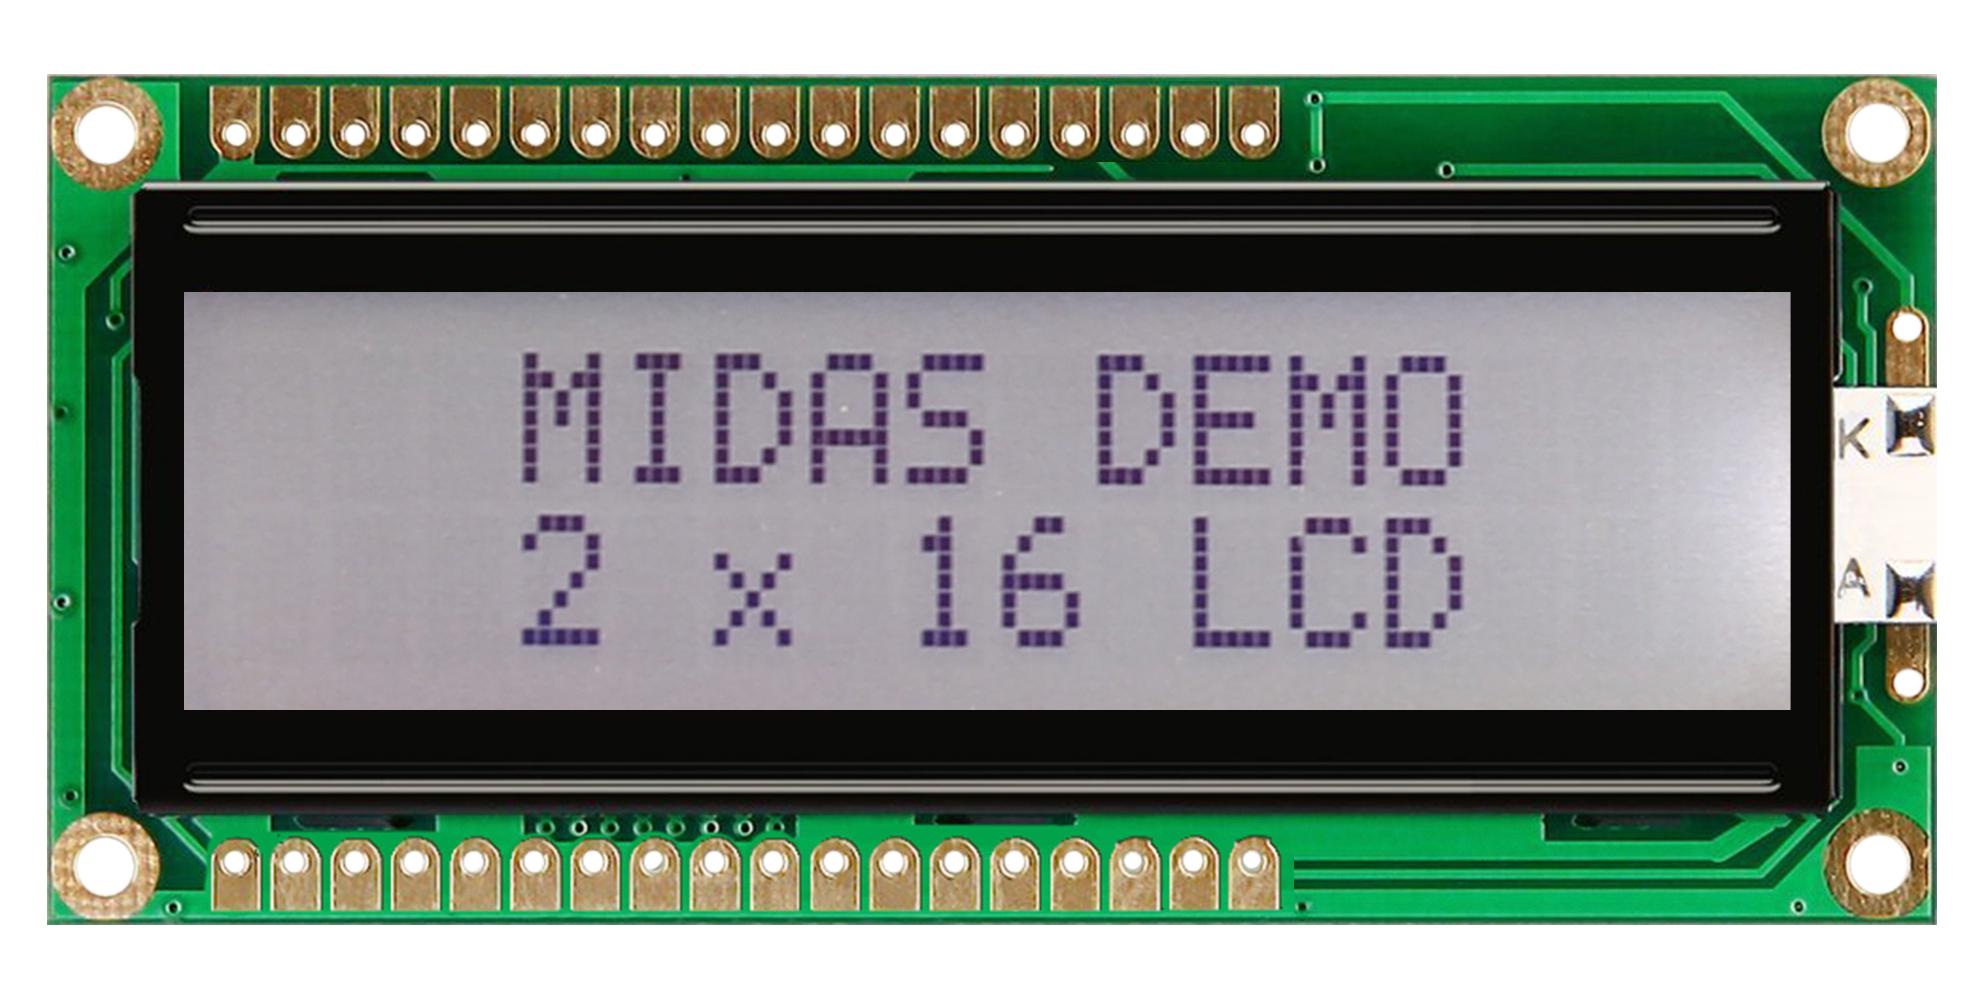 MC21605G6W-FPTLW3.3-V2 LCD DISPLAY, COB, 16 X 2, FSTN, 3.3V MIDAS